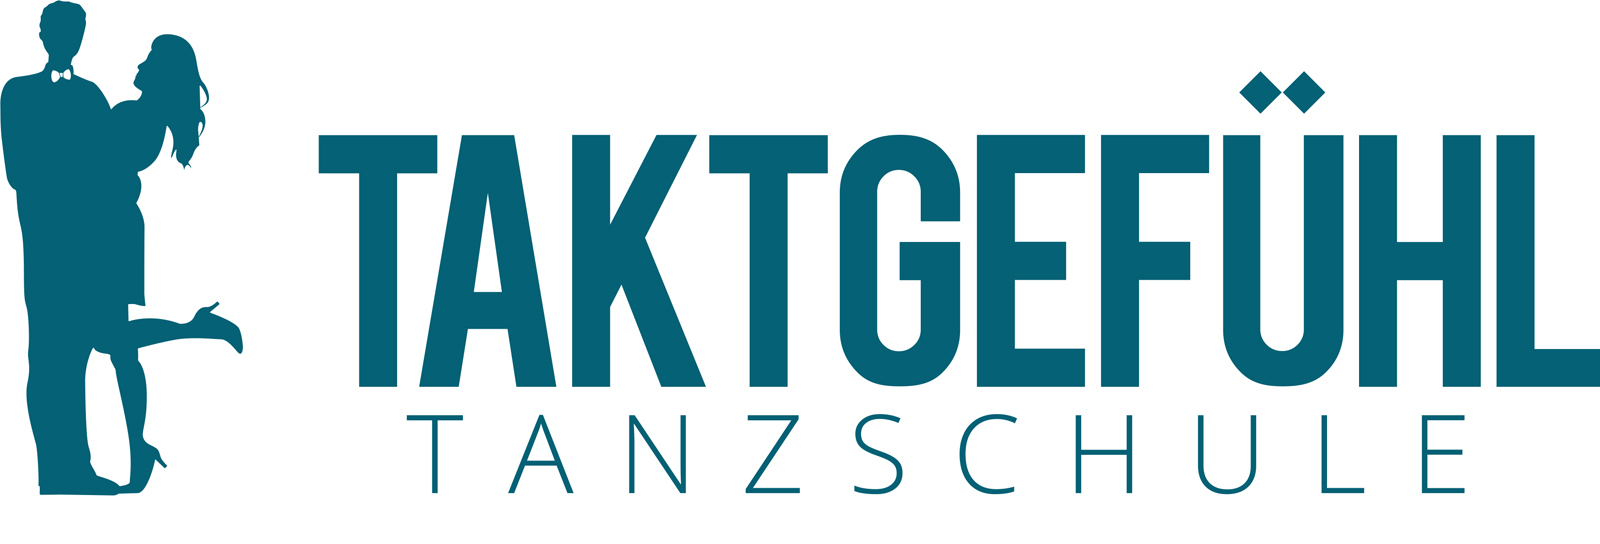 Logo of Tanzschule Taktgefühl GmbH